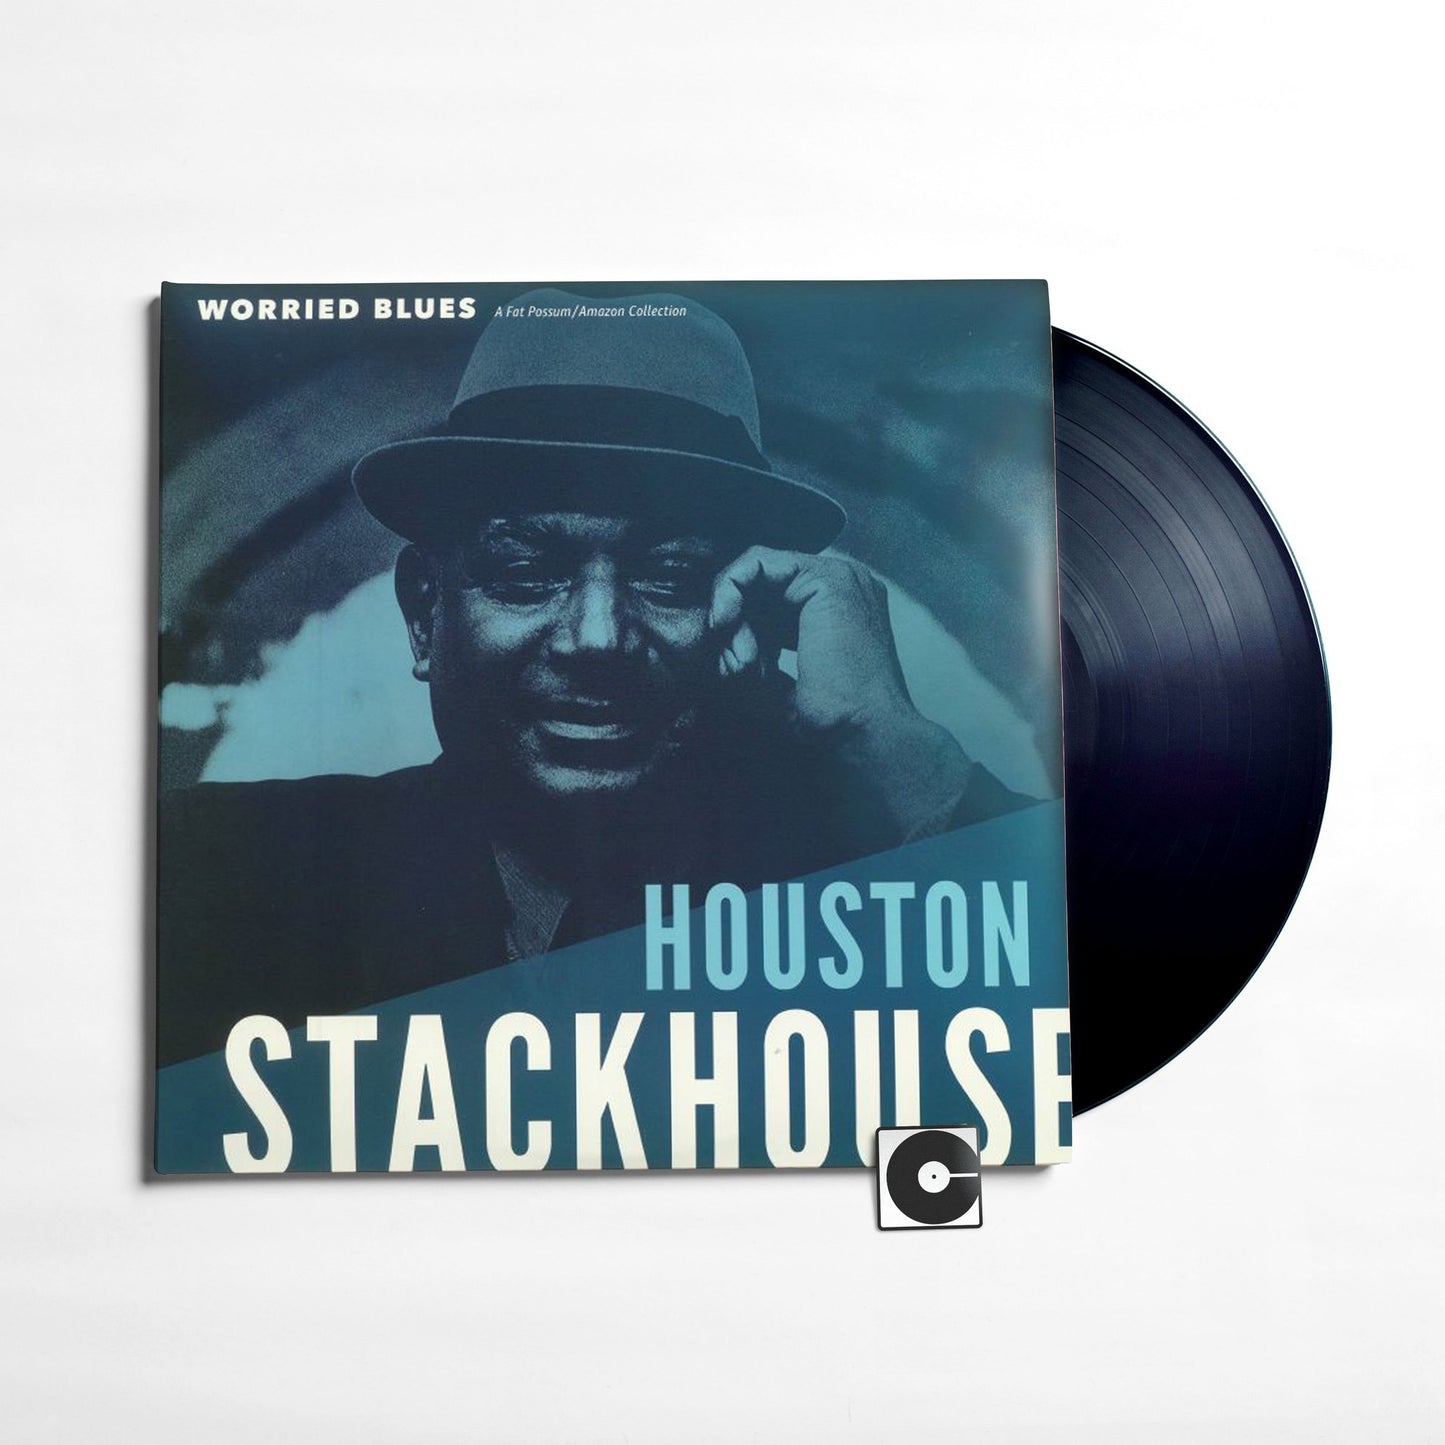 Houston Stackhouse - "Houston Stackhouse: Worried Blues"